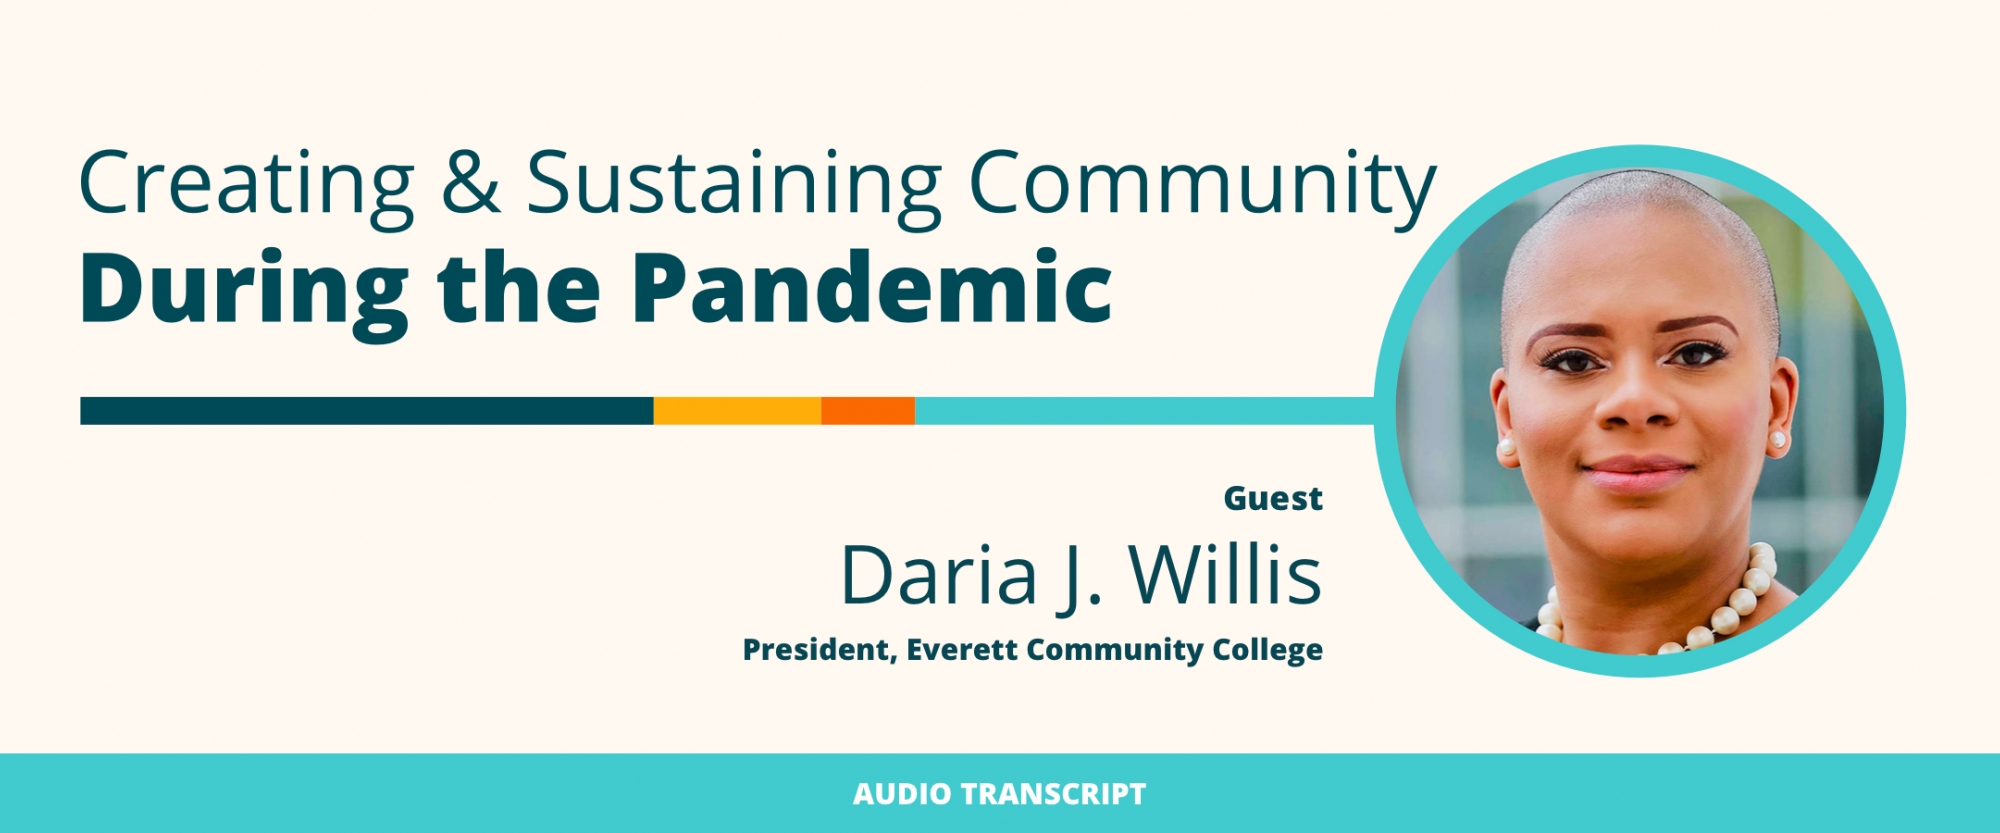 Weekly Wisdom Episode 14: Transcript of Conversation With Daria J. Willis, Everett Community College President